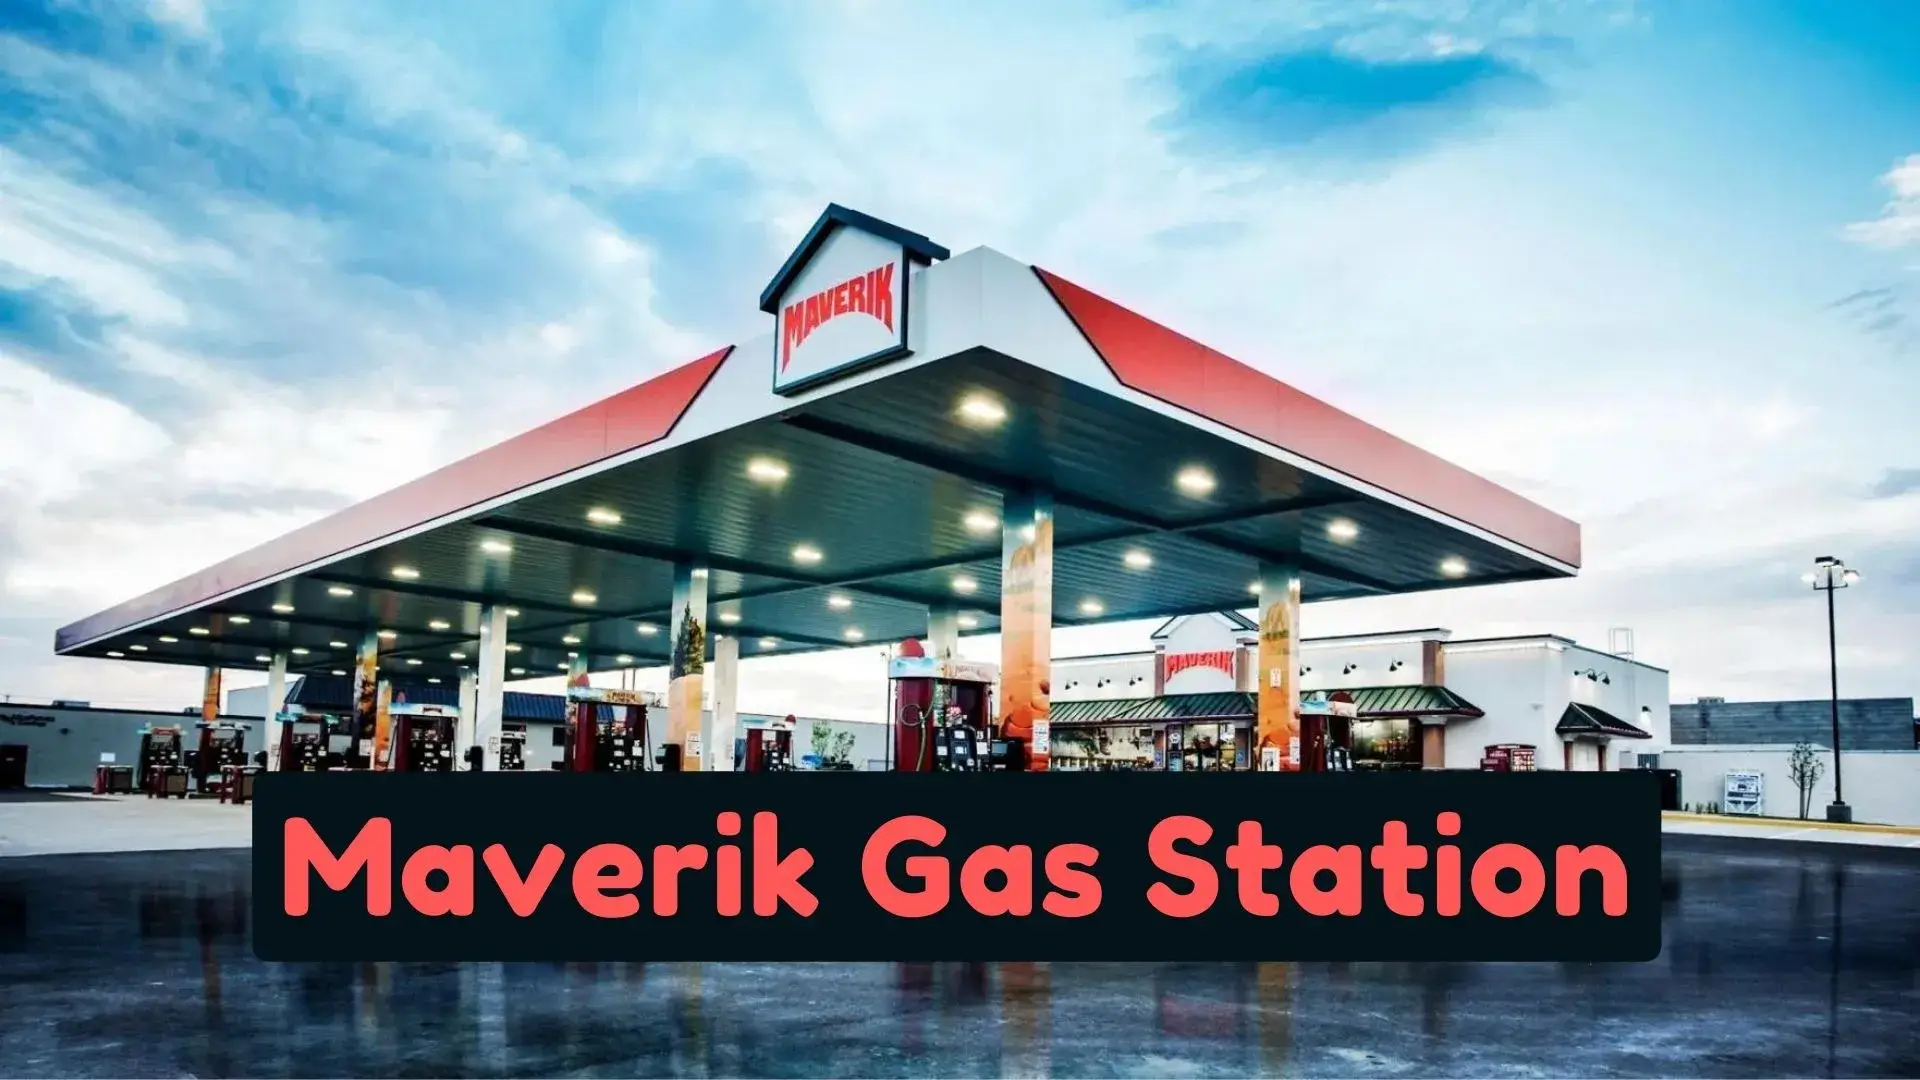 Maverik Gas Station Near Me: Find Your Reliable Gas Station